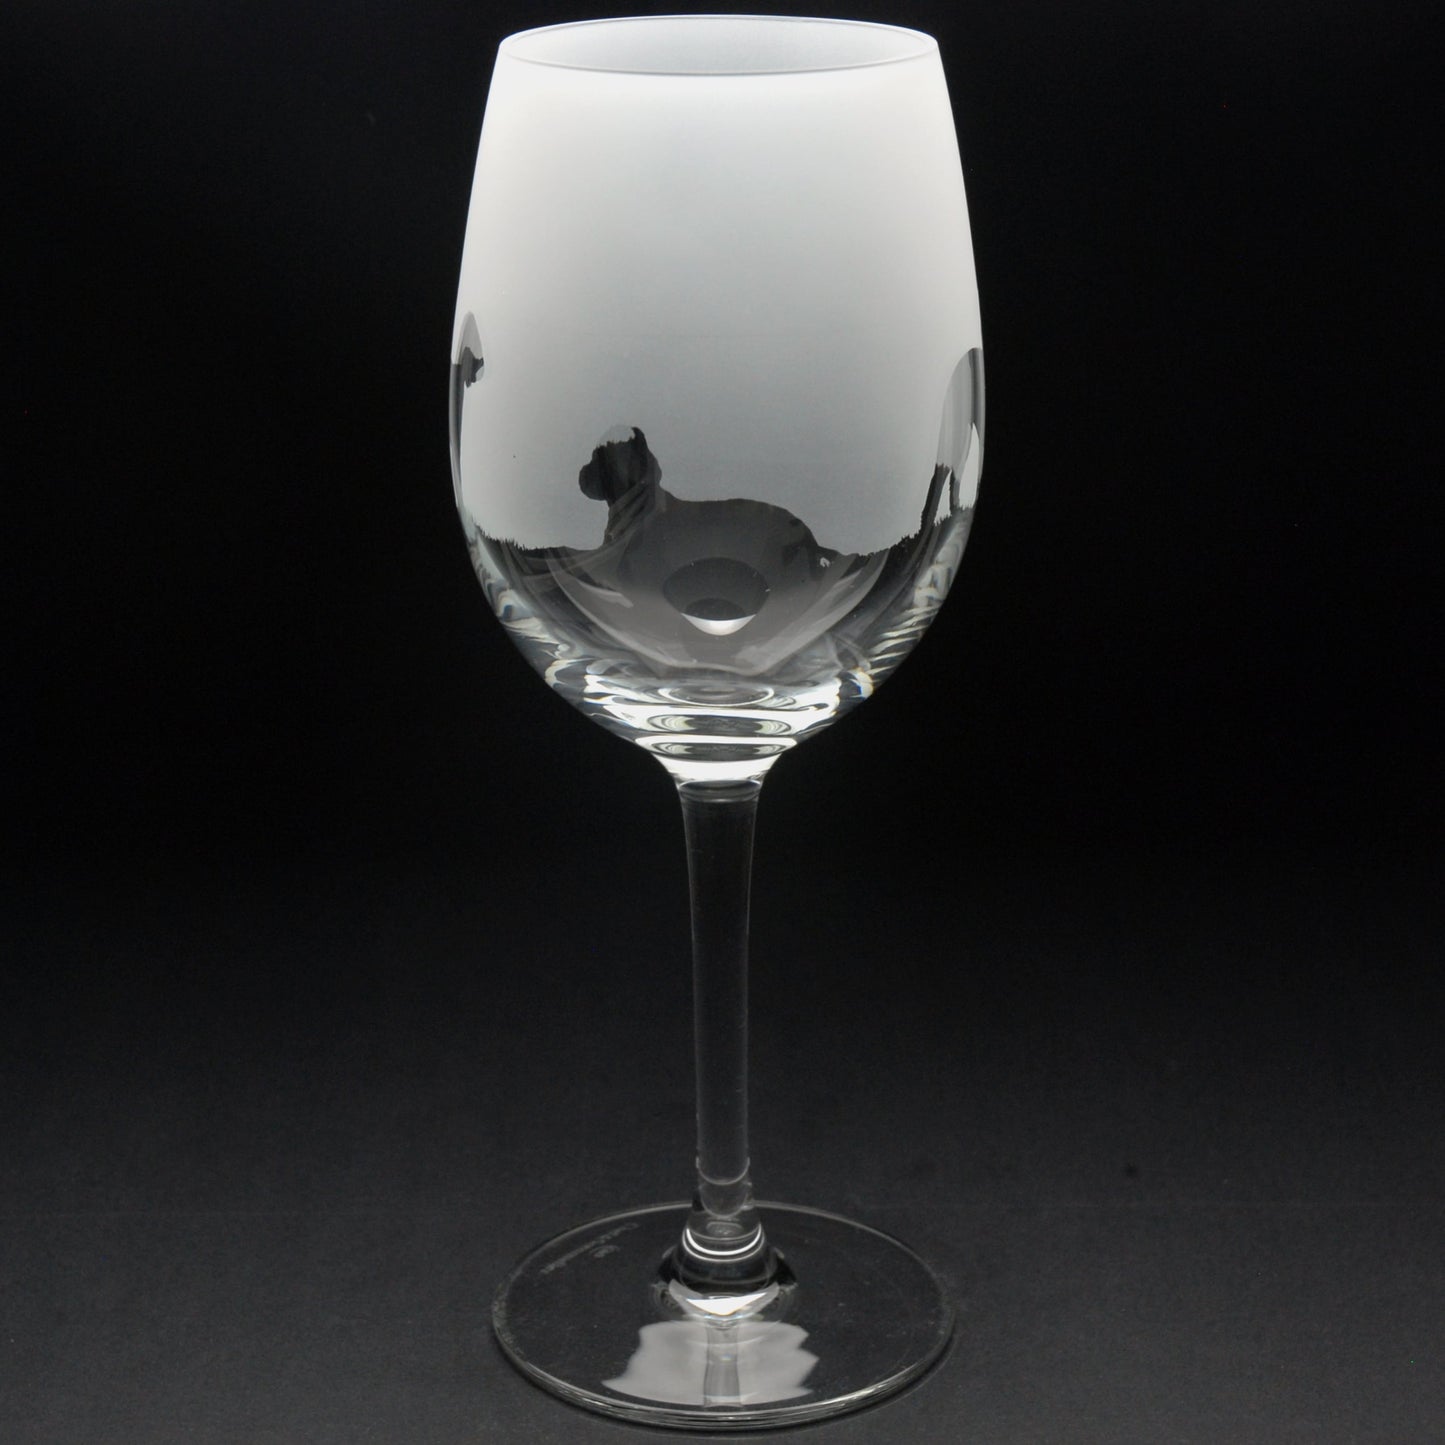 Bedlington Terrier Dog Crystal Wine Glass - Hand Etched/Engraved Gift